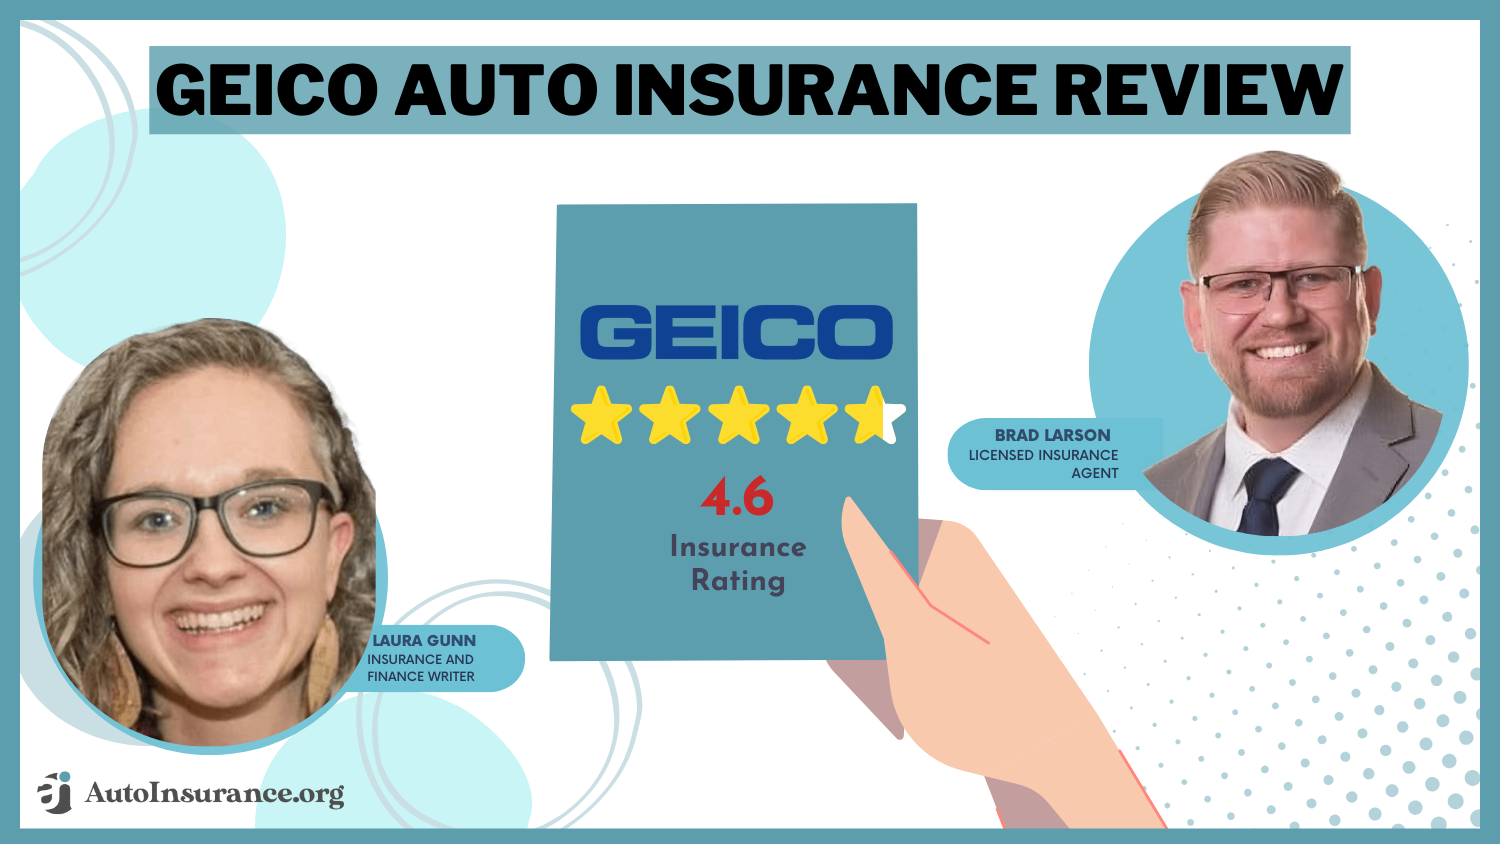 Geico Auto Insurance Review